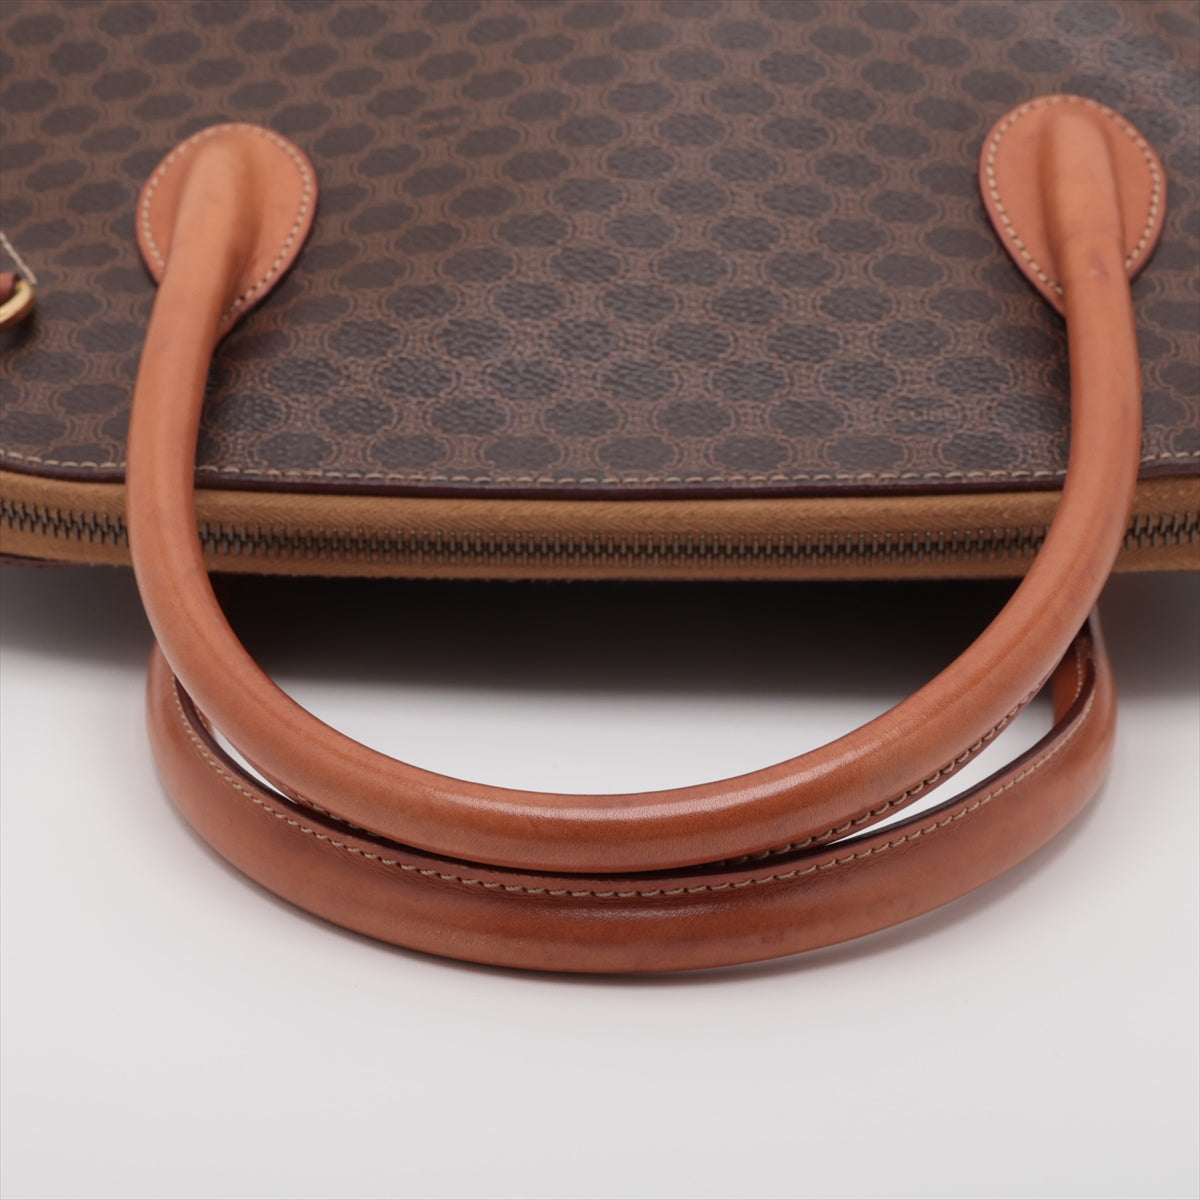 Celine Macadam PVC & leather Handbag Brown